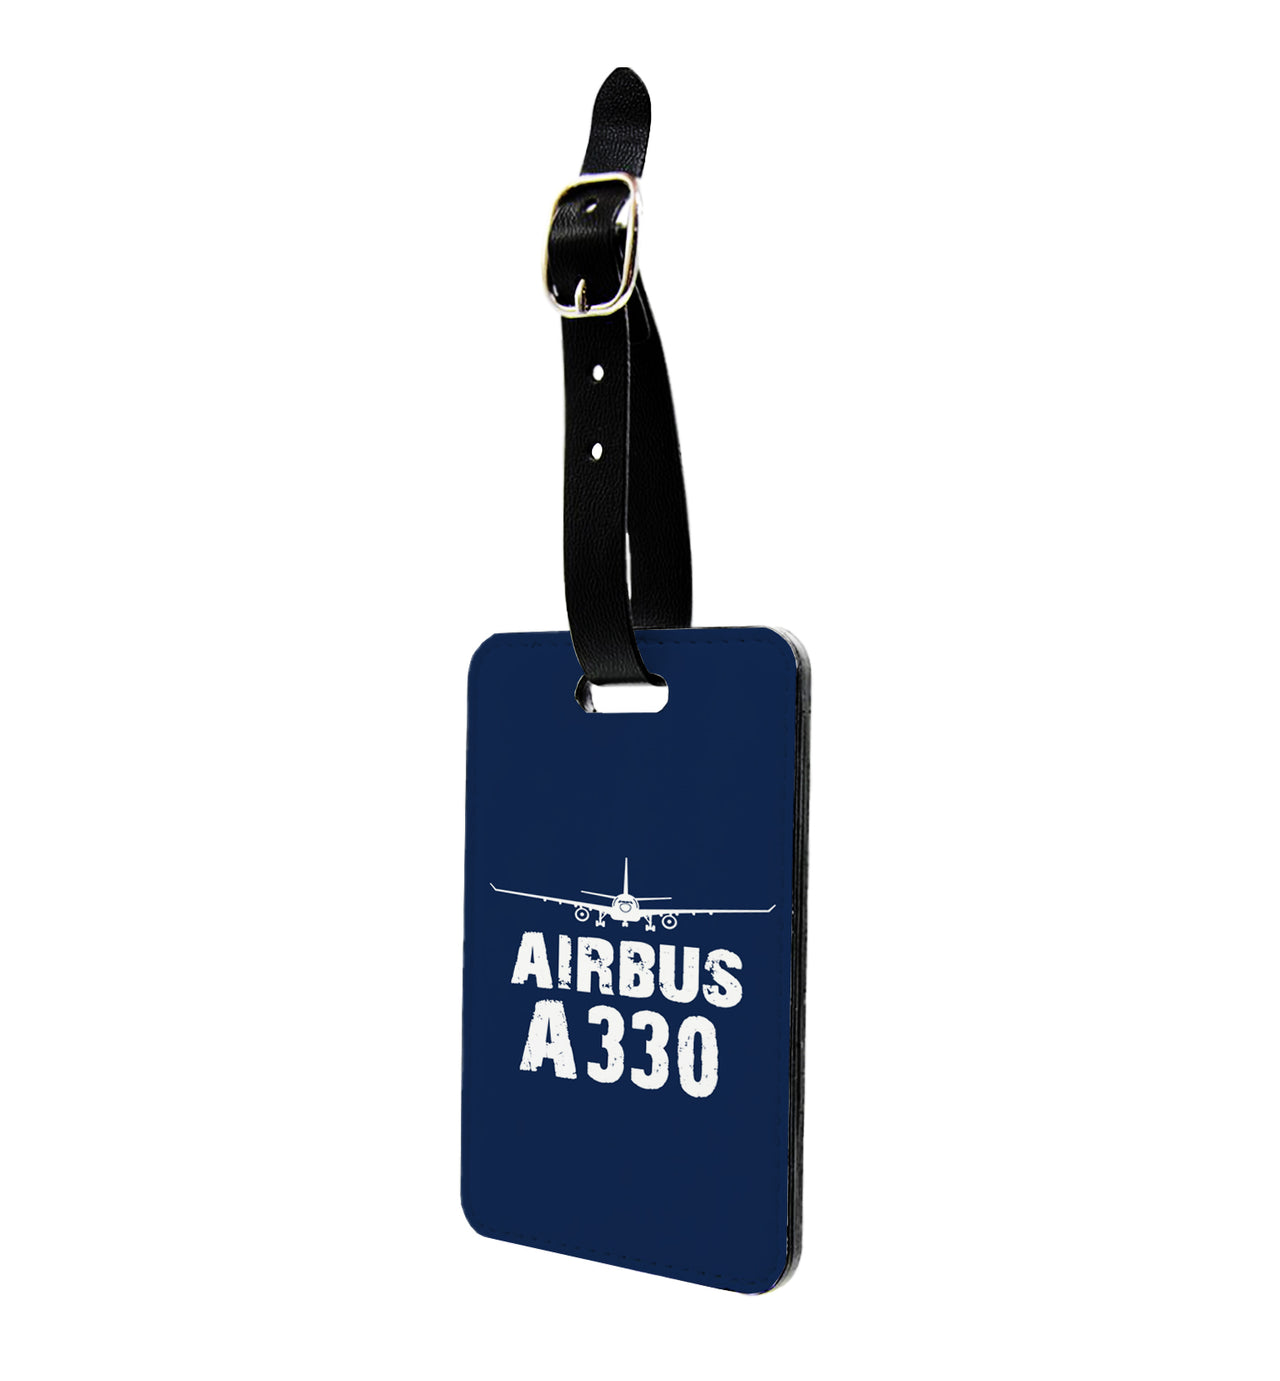 Airbus A330 & Plane Designed Luggage Tag